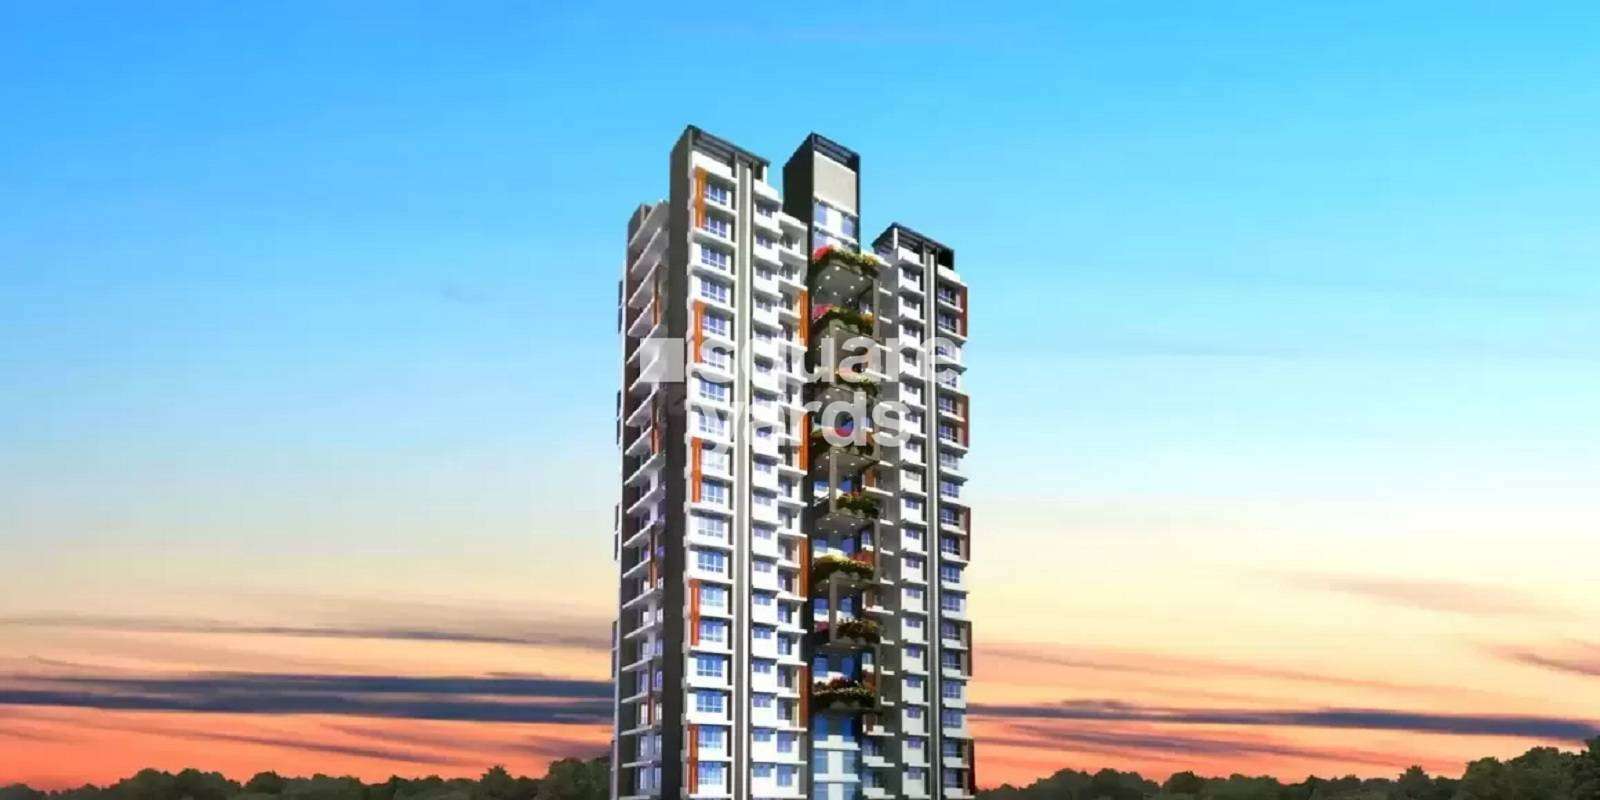 Poddar Samadhan Apartments Cover Image